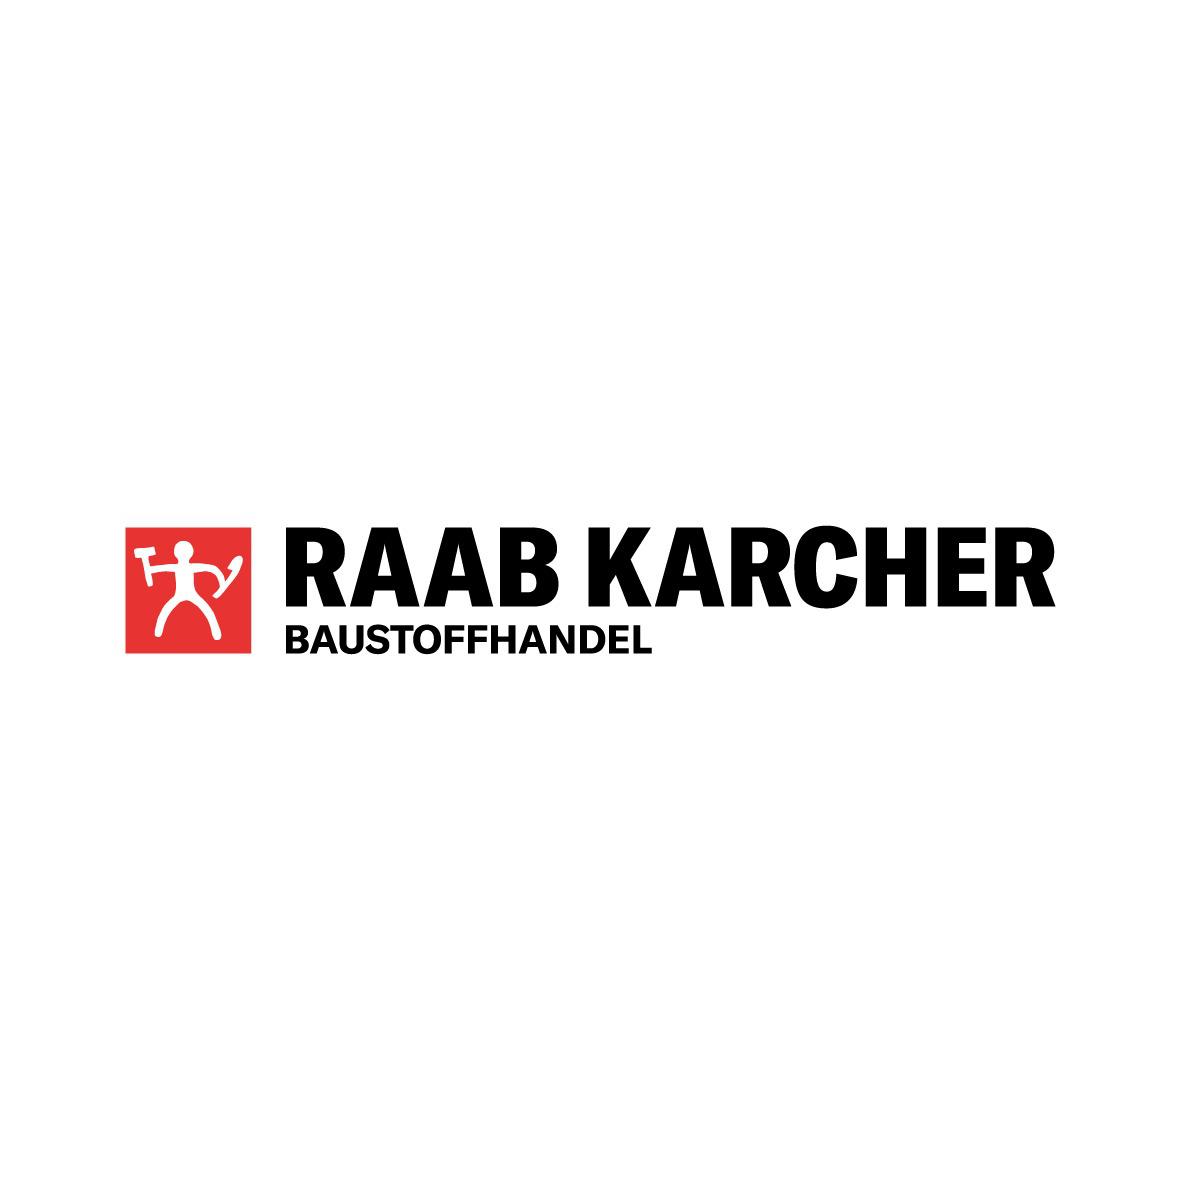 Raab Karcher in Eislingen Fils - Logo